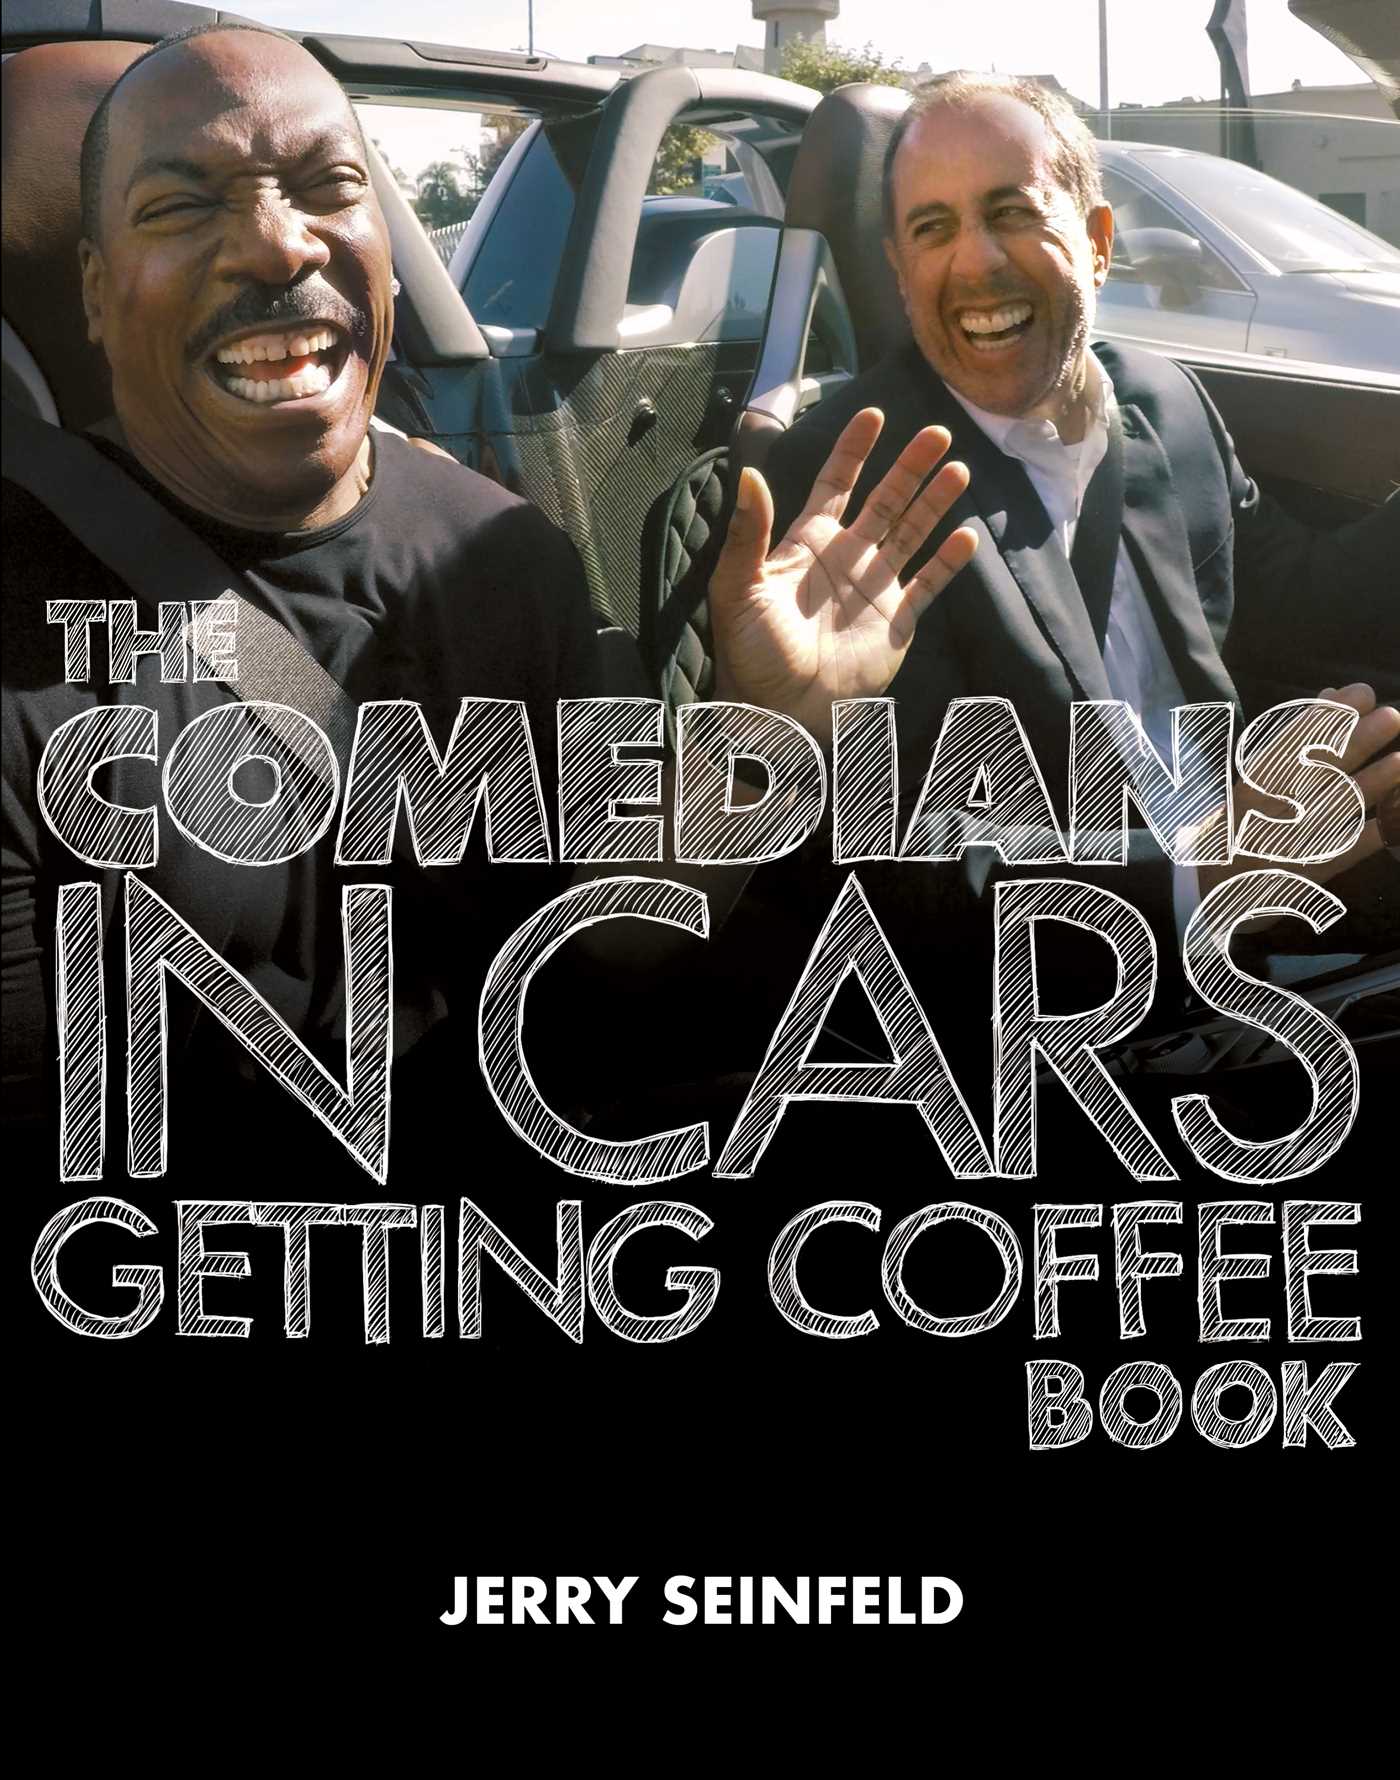 The Comedians in Cars Getting Coffee Book | Biography & Memoir